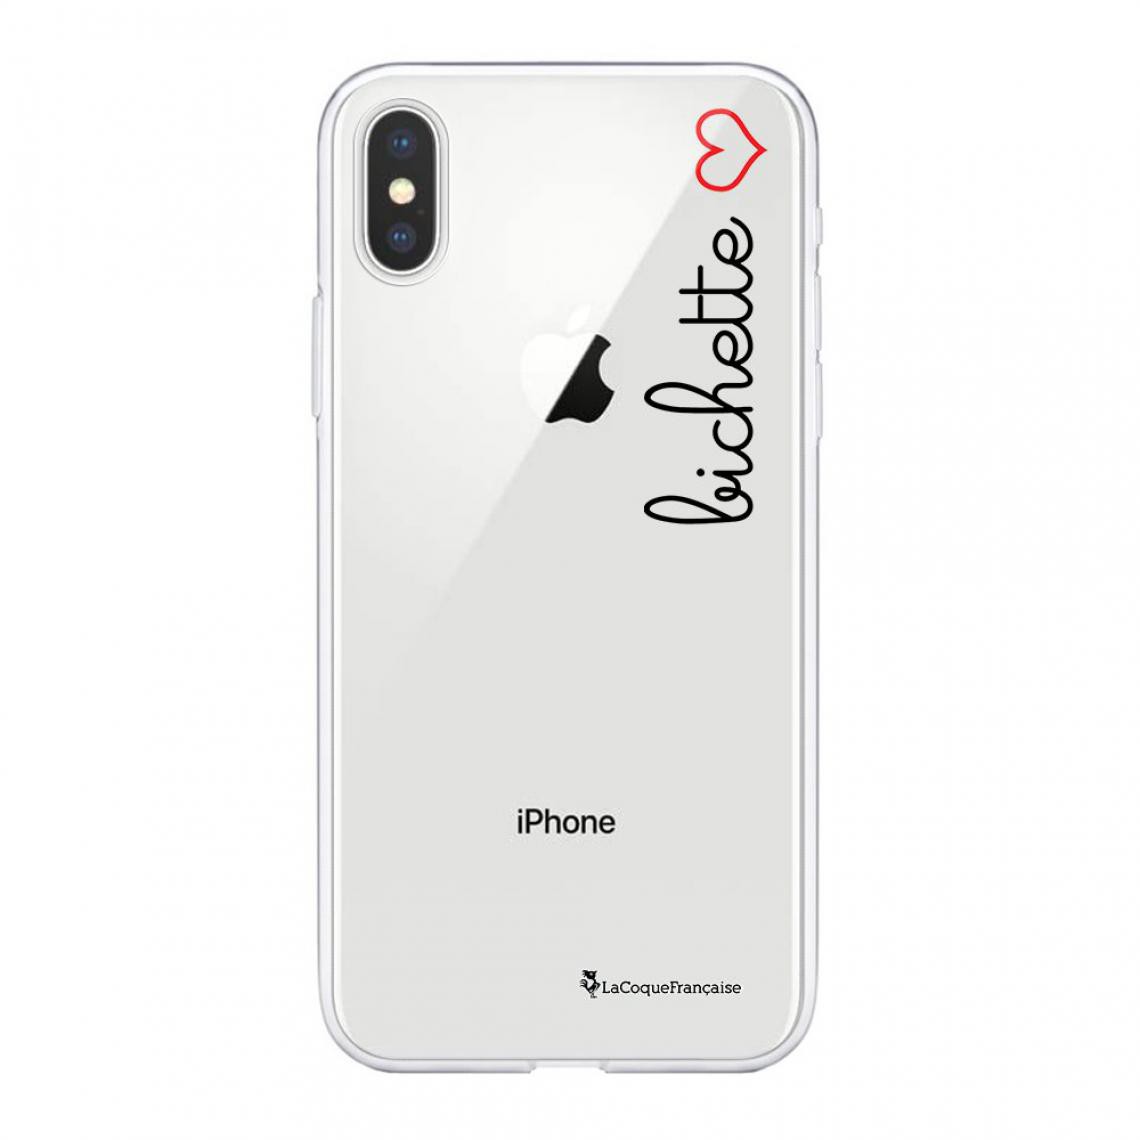 La Coque Francaise - Coque iPhone X/Xs souple silicone transparente - Coque, étui smartphone